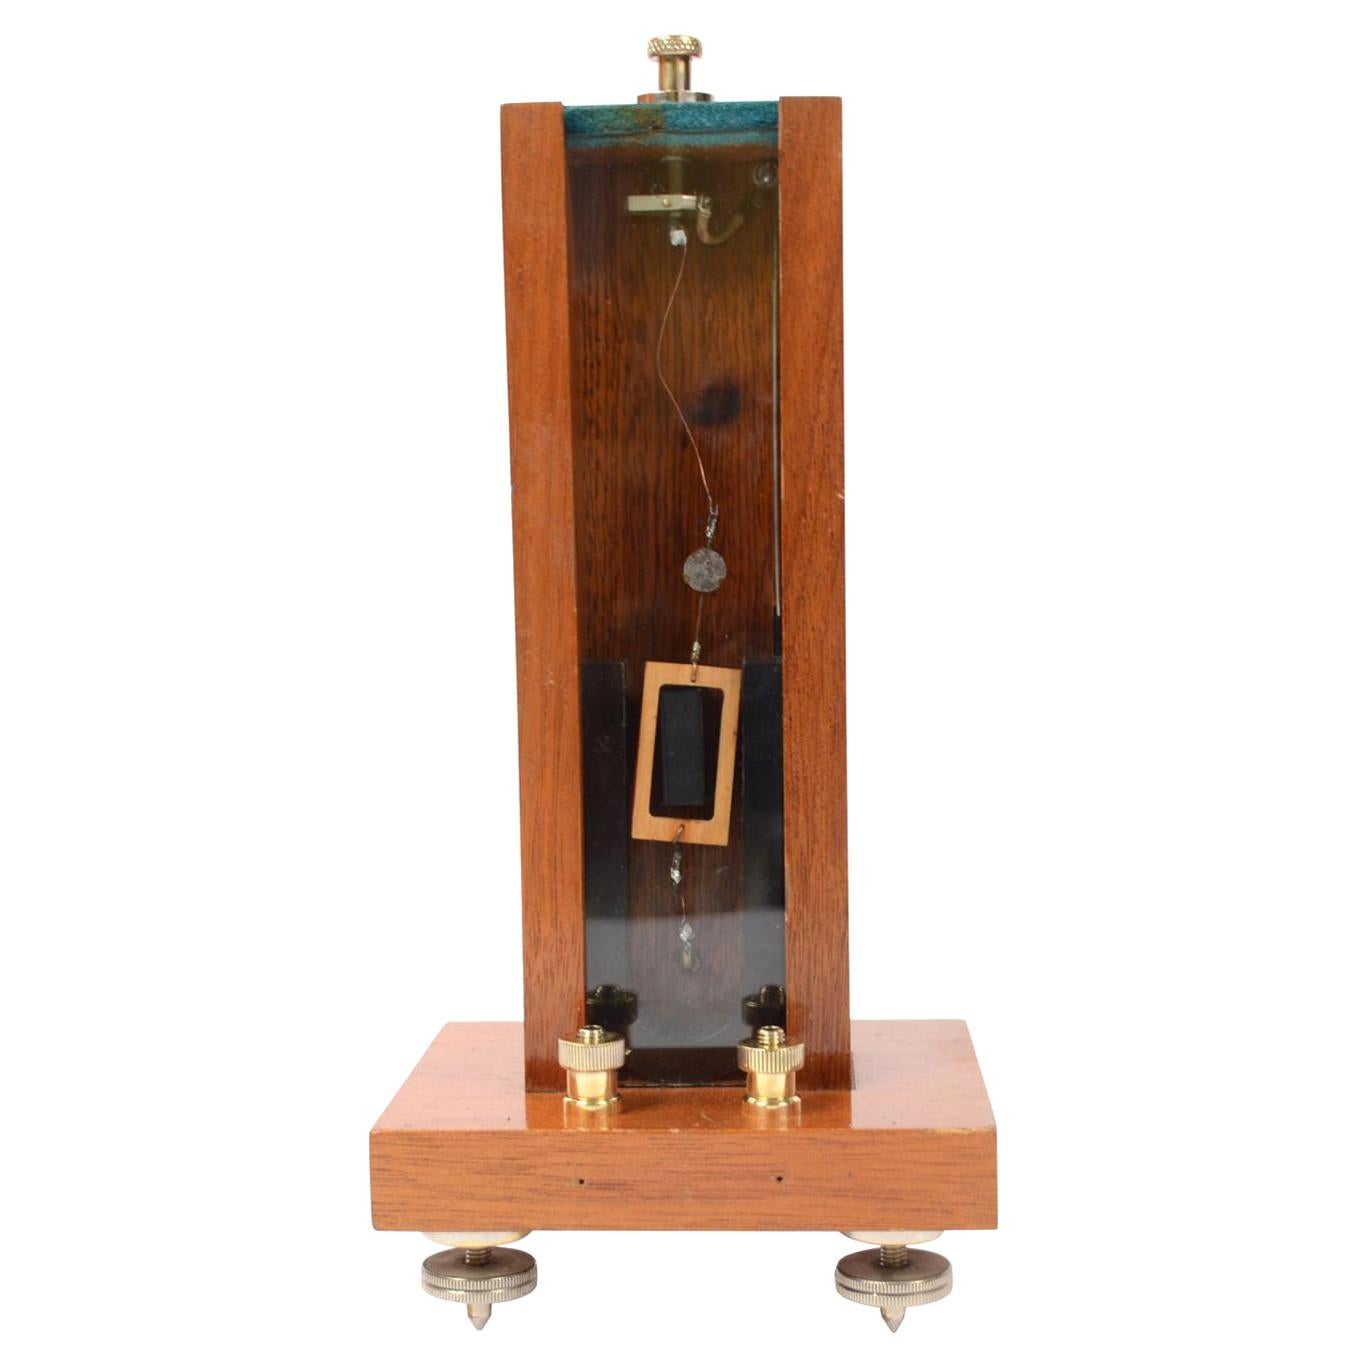 Galvanometer Antique Measuring Instrument Used for Telegraph Cables 1850 circa